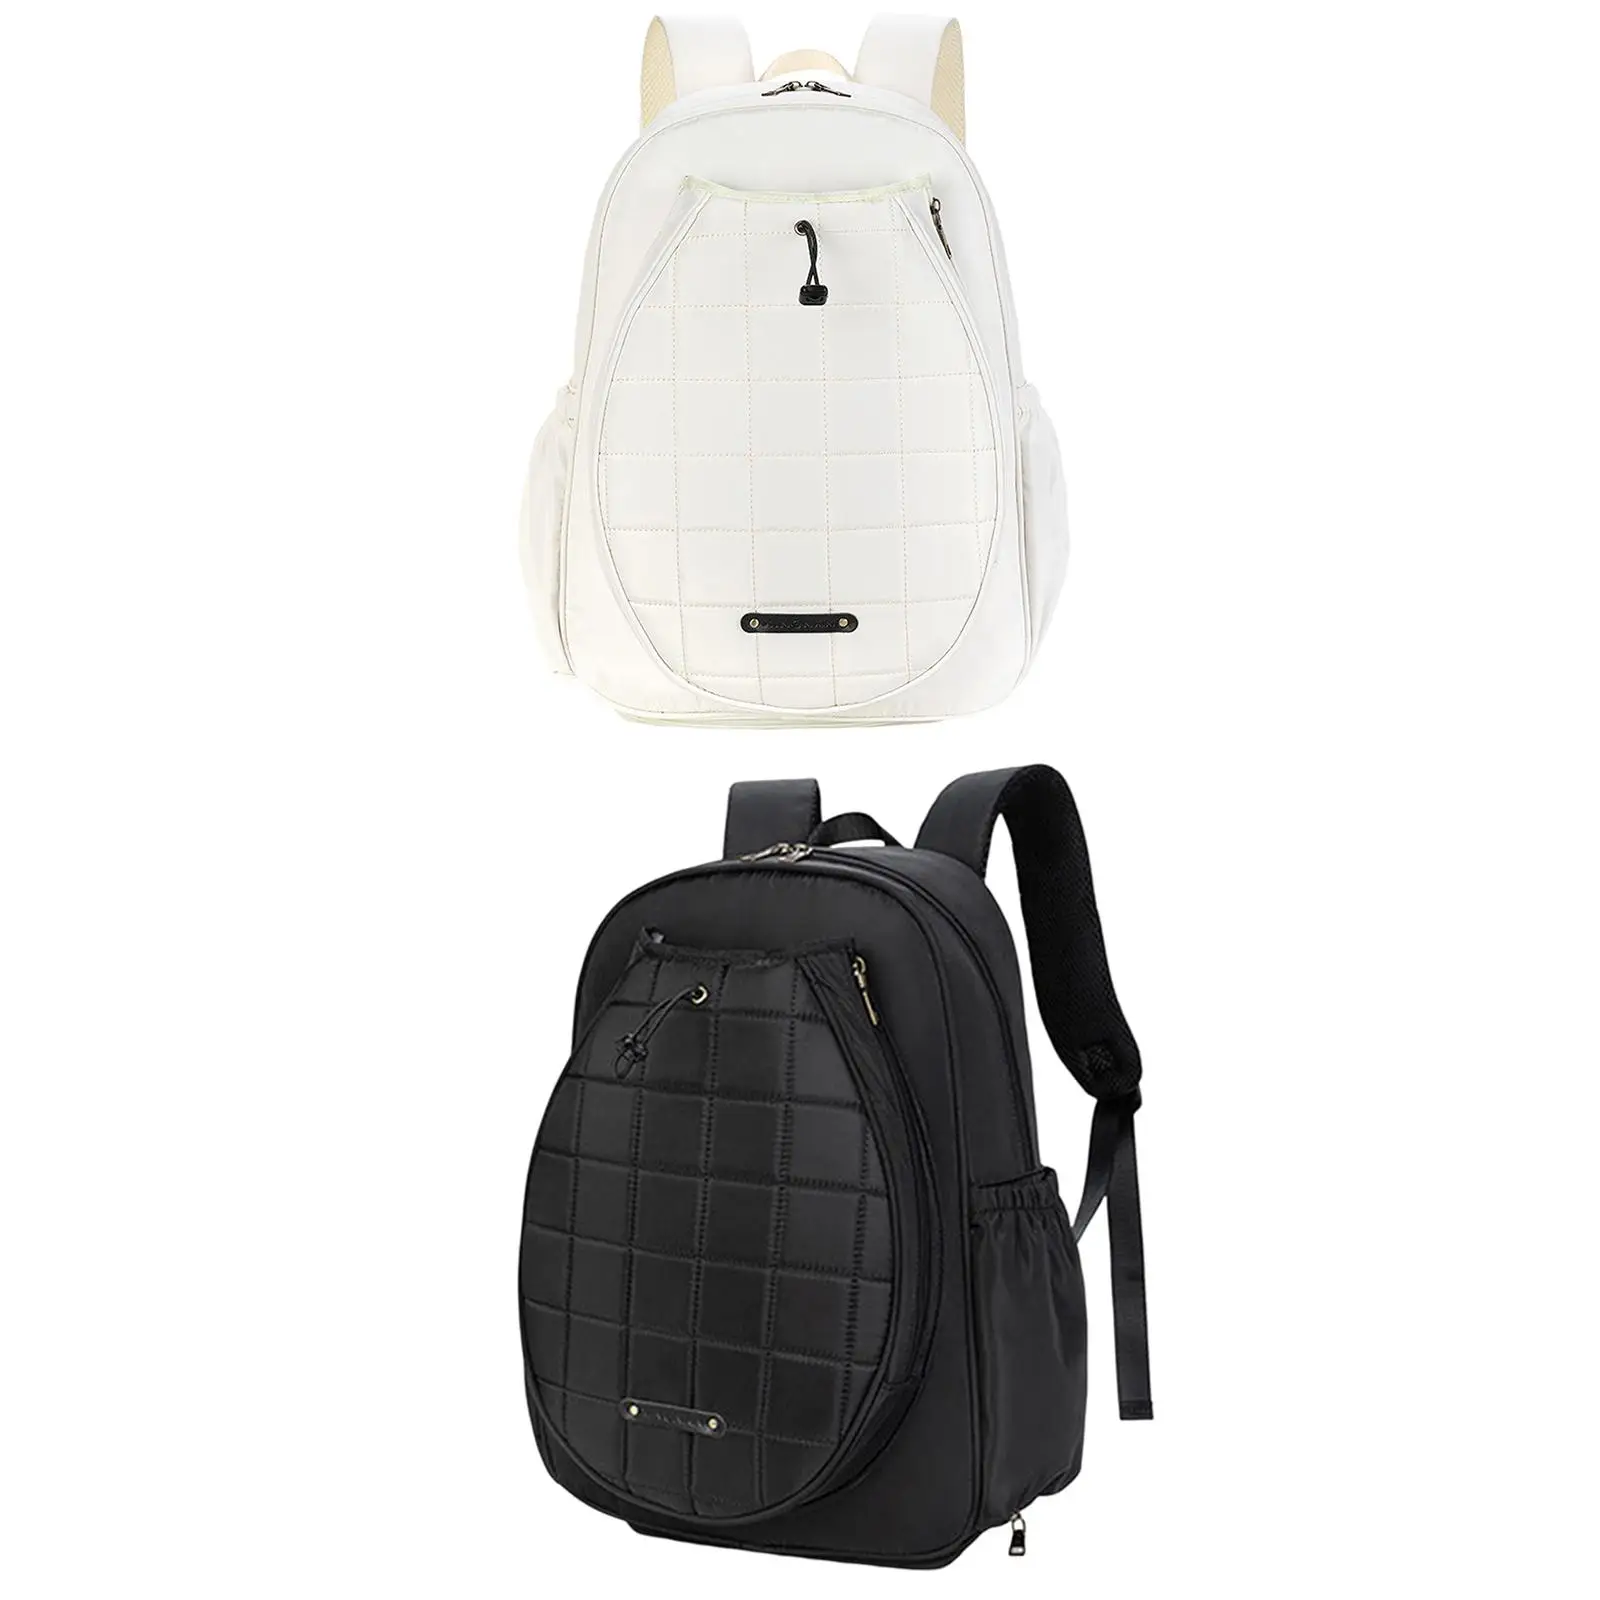 Tennis Backpack Tennis Bag Racquet Cover for Tennis Racket Balls Accessories